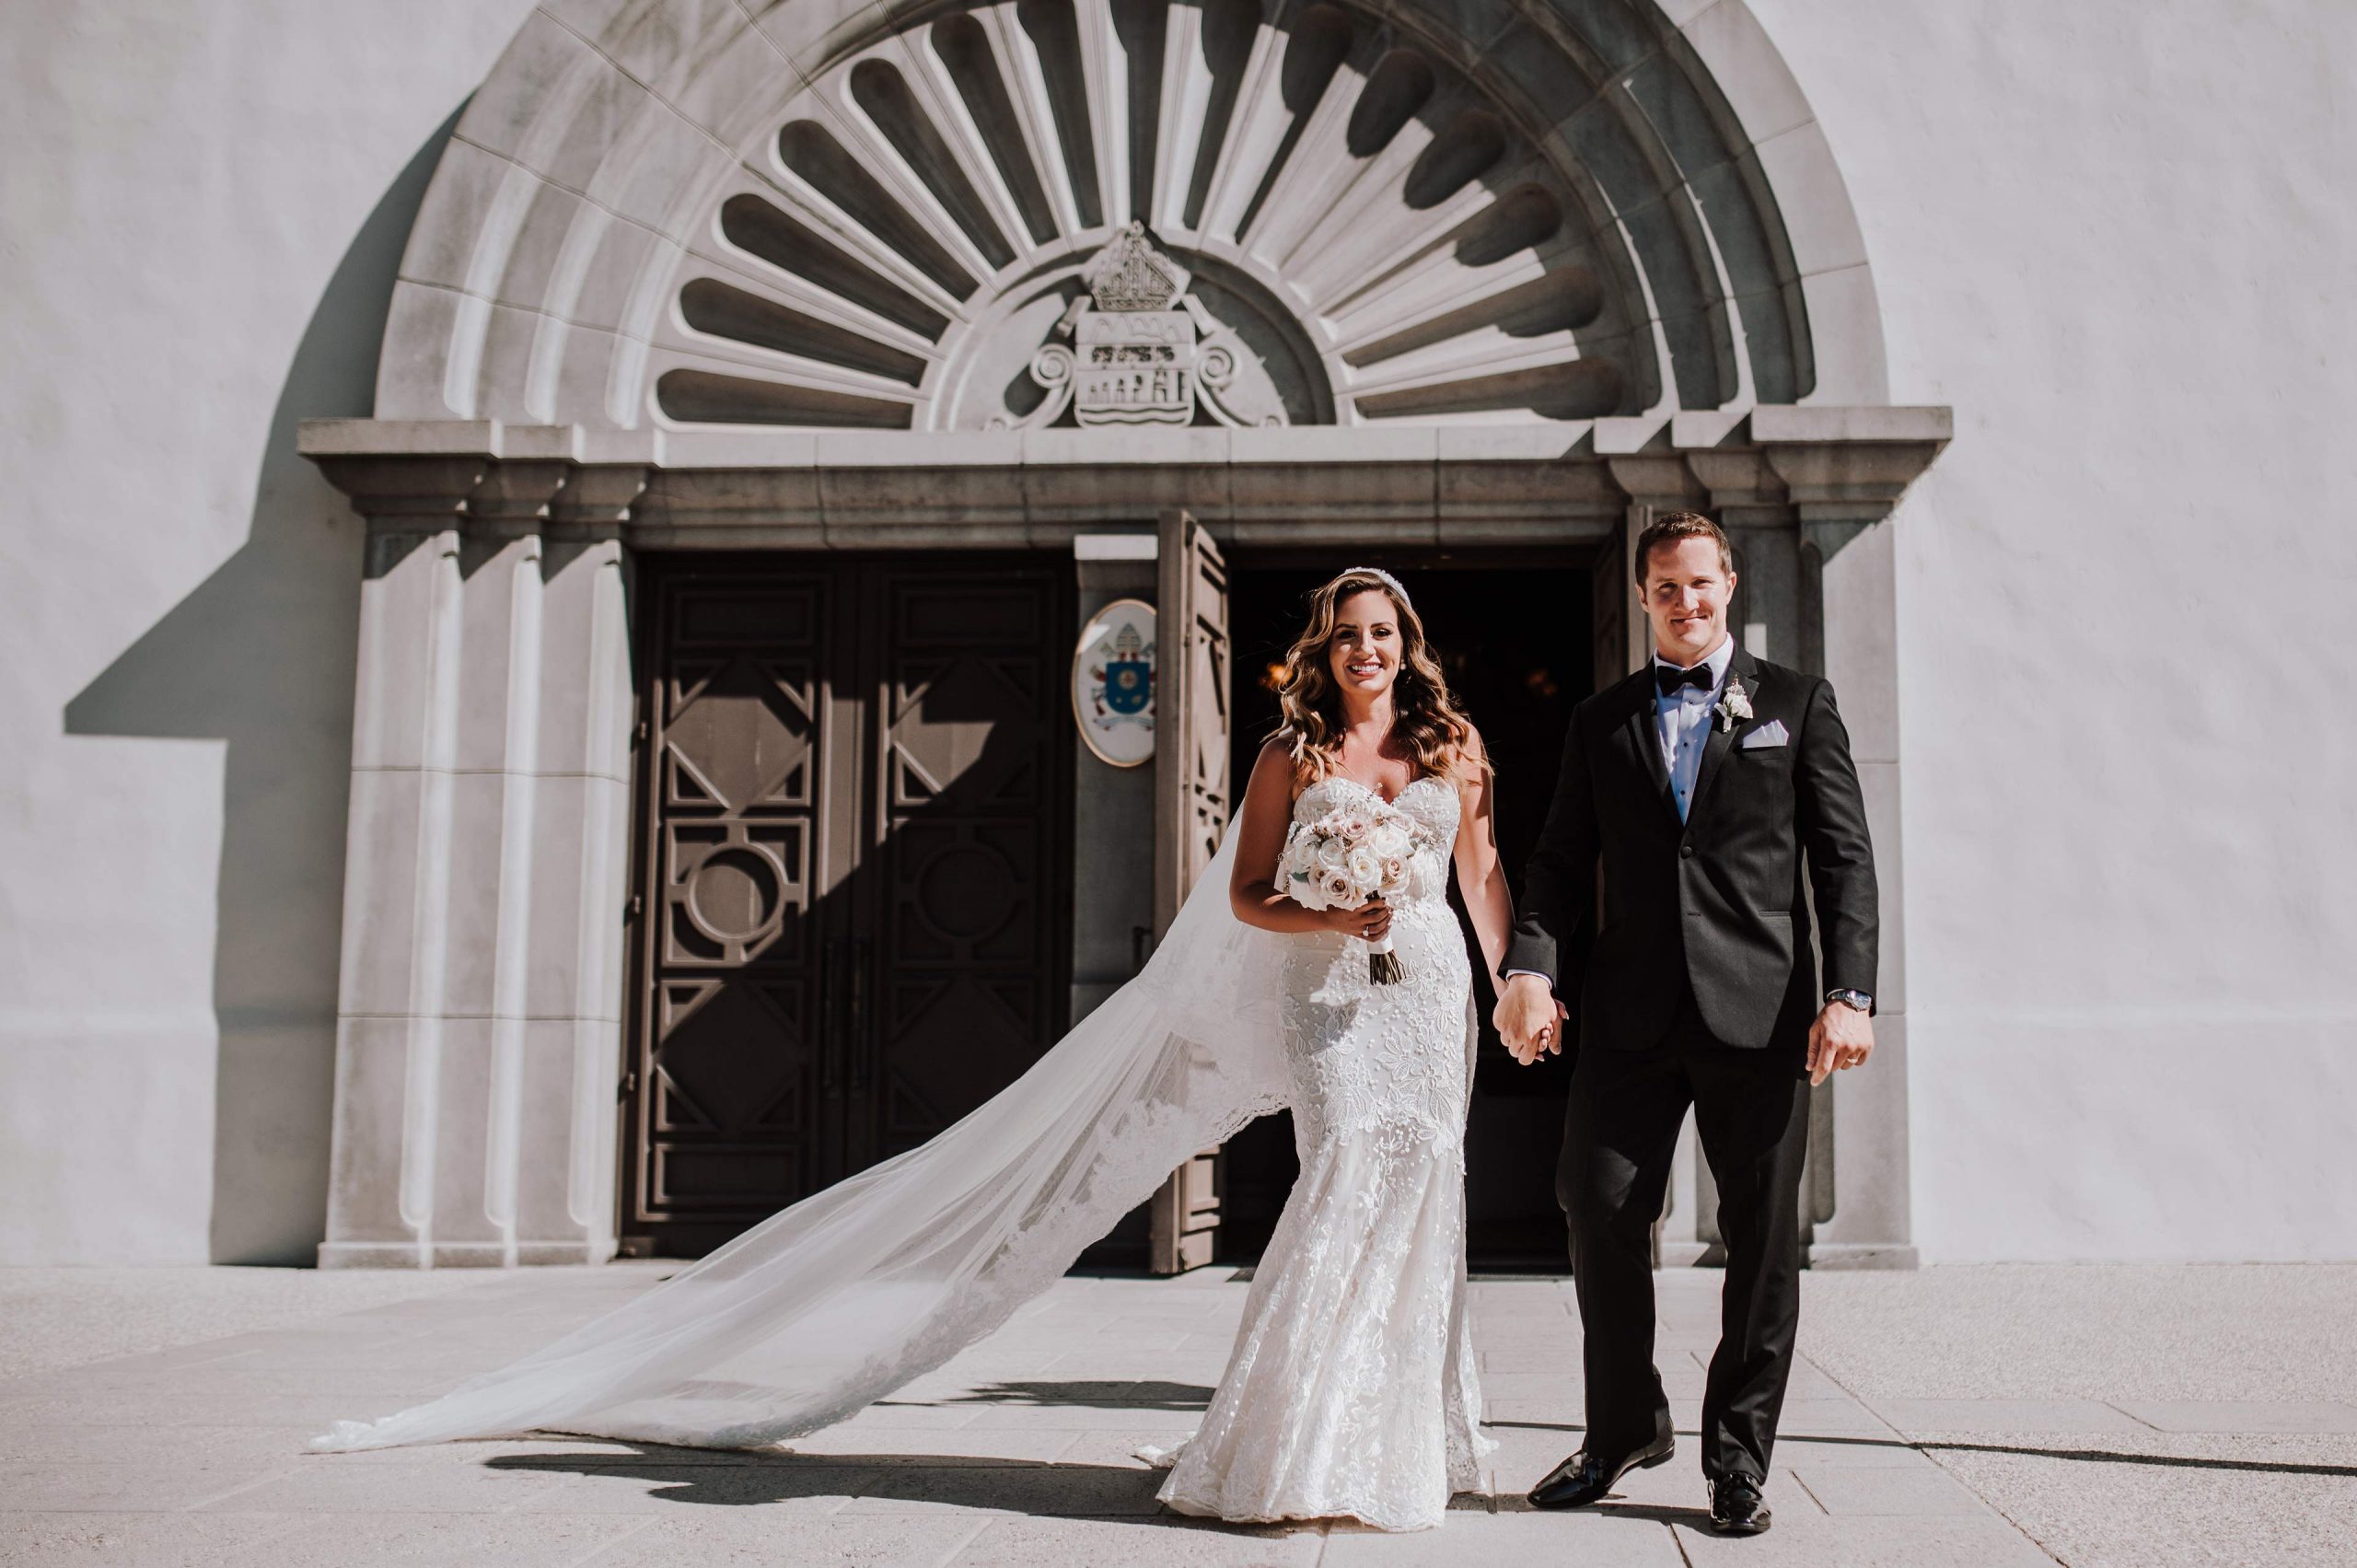 Mission Basilica San Juan Capistrano Wedding - wedding photography in California - 12